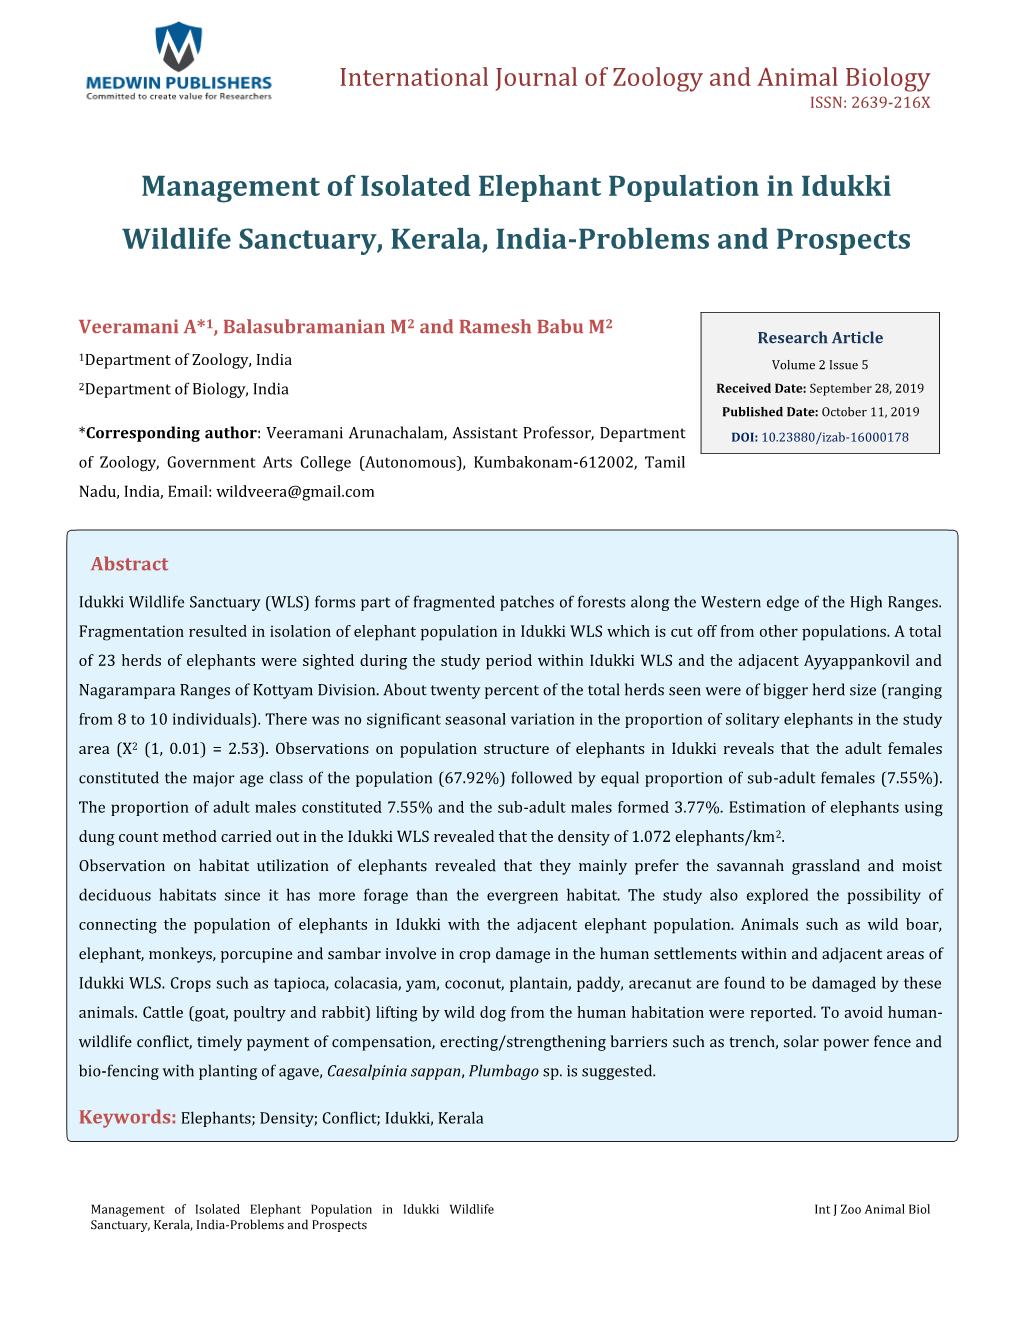 Veeramani A, Et Al. Management of Isolated Elephant Population in Copyright© Veeramani A, Et Al